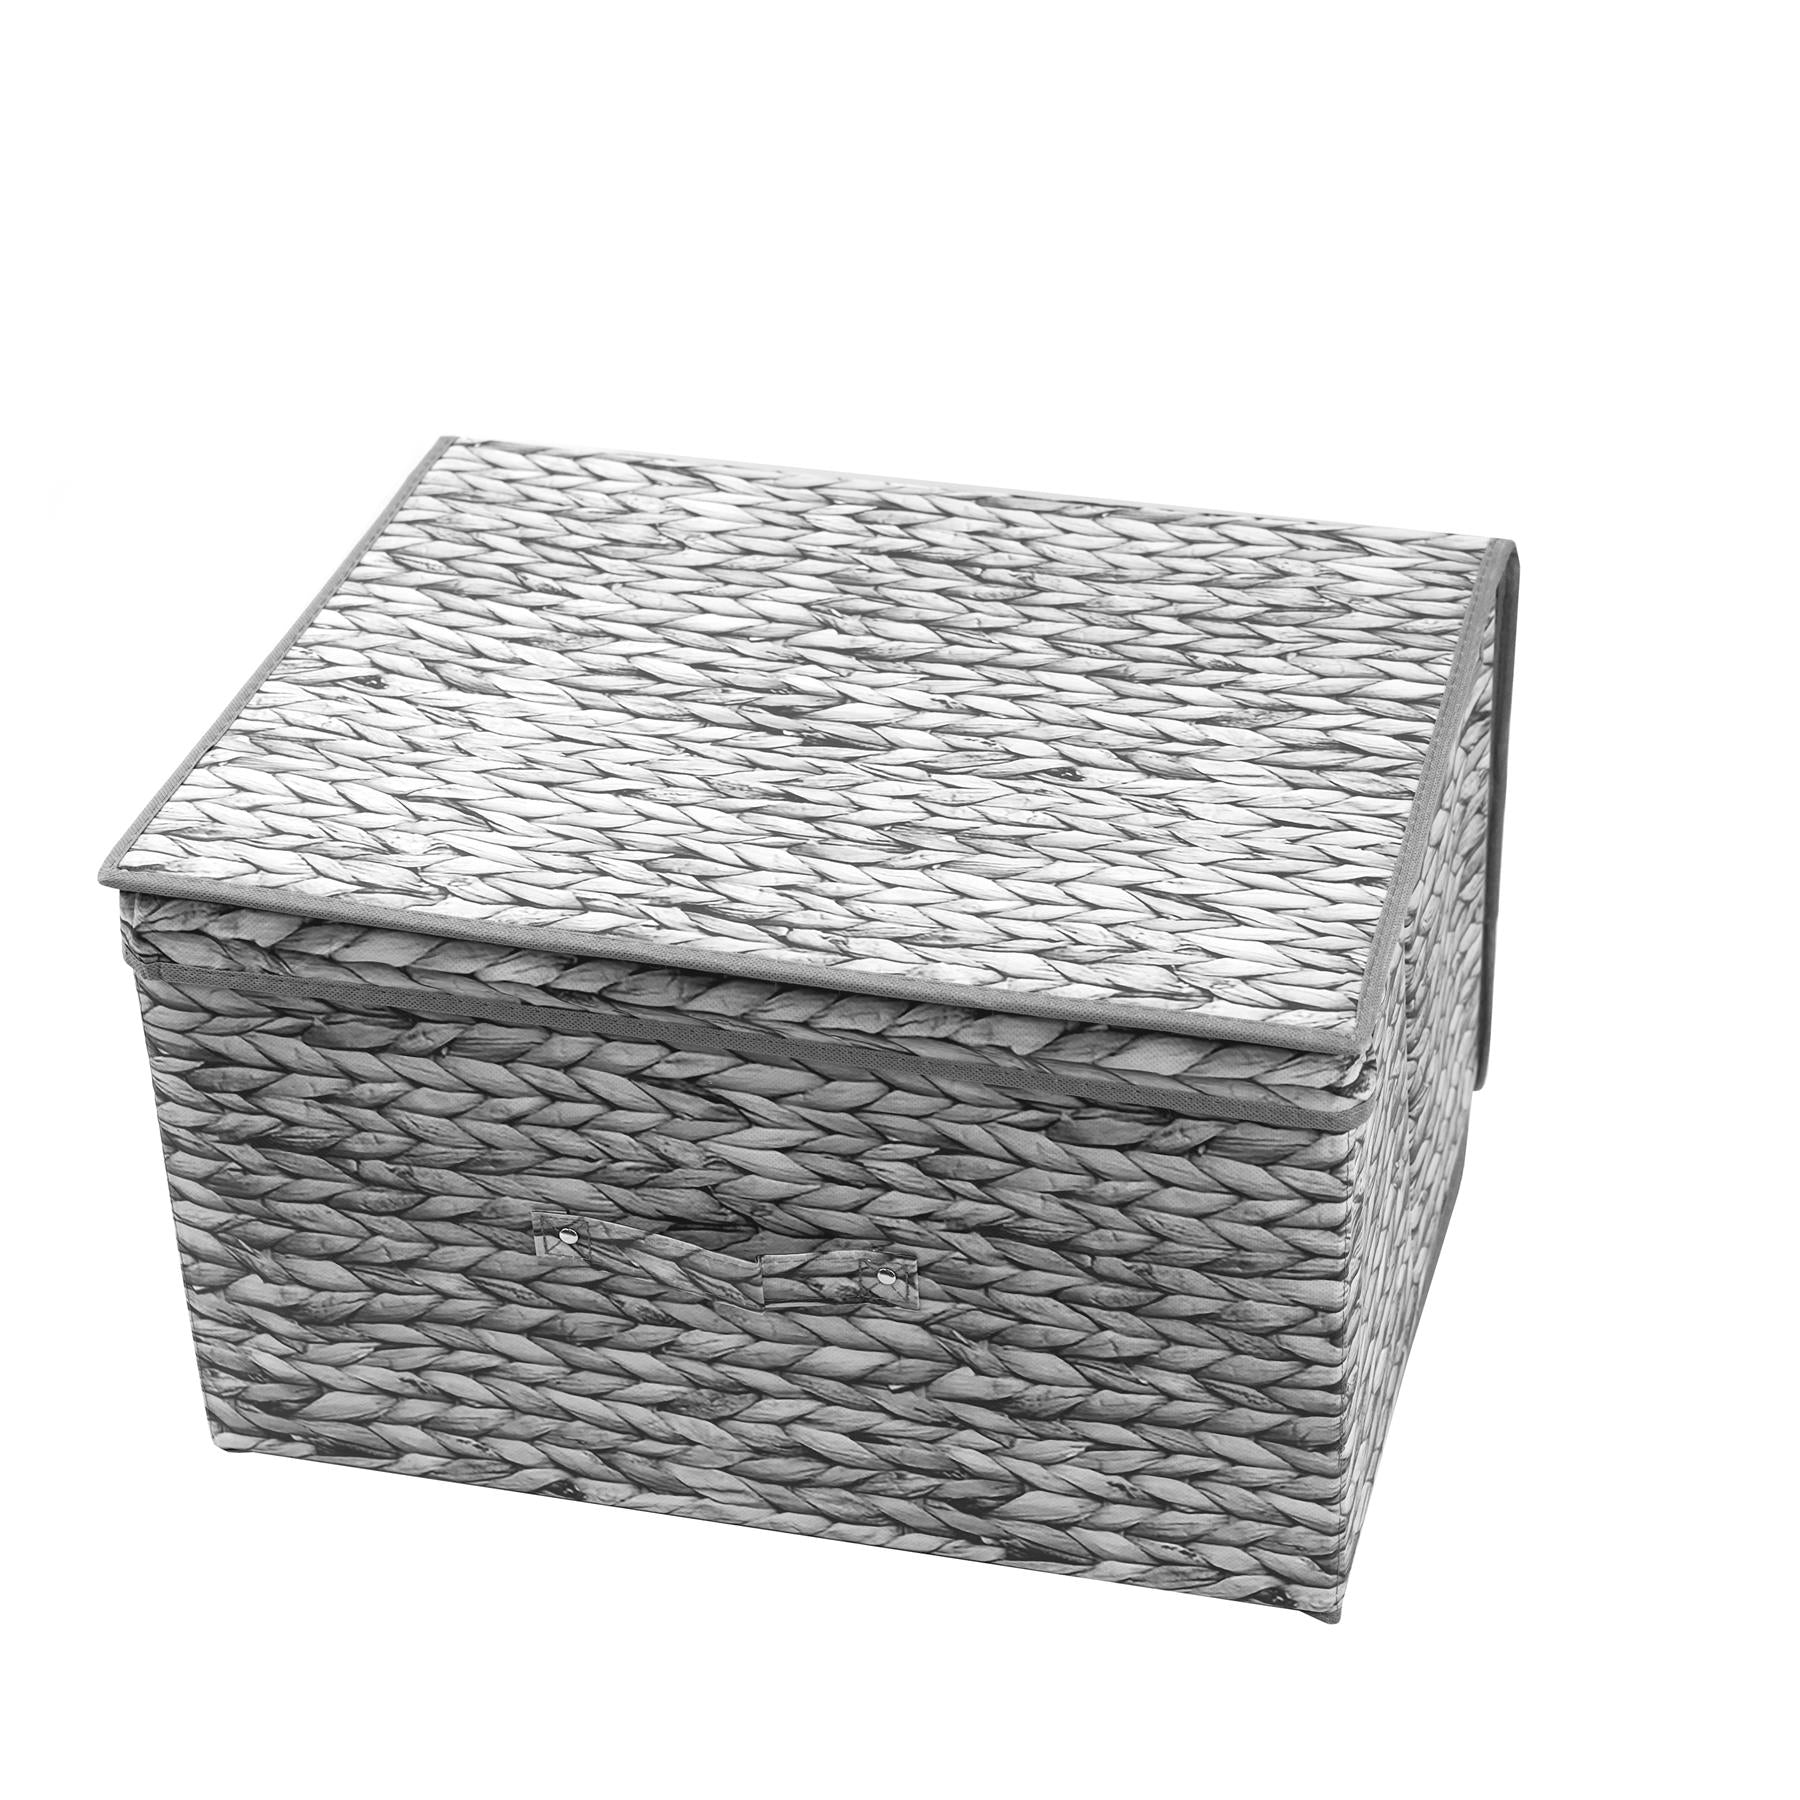 Weave Grey Storage Box by The Magic Toy Shop - UKBuyZone